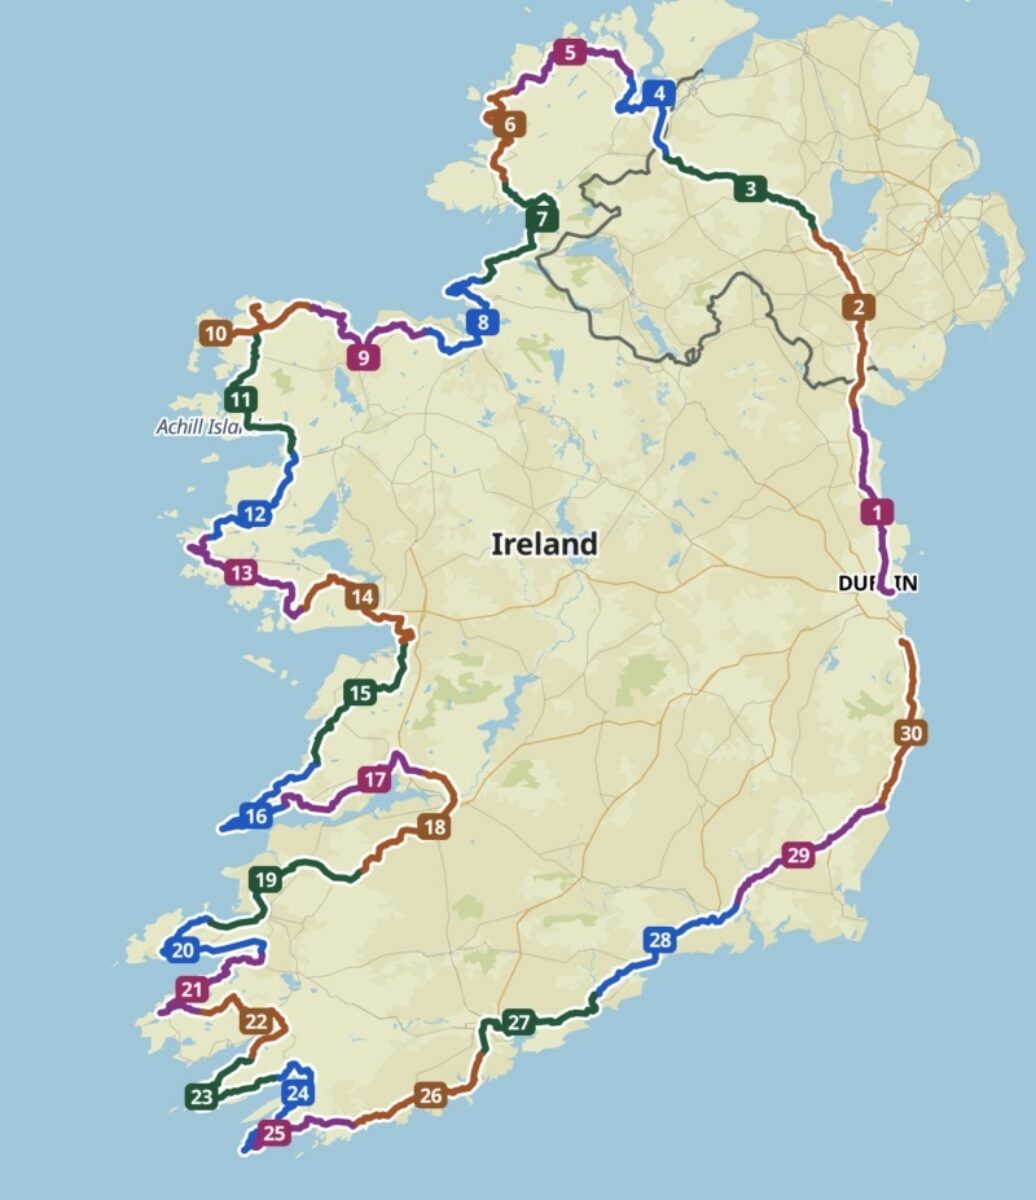 First draft of my cycle tour around Ireland